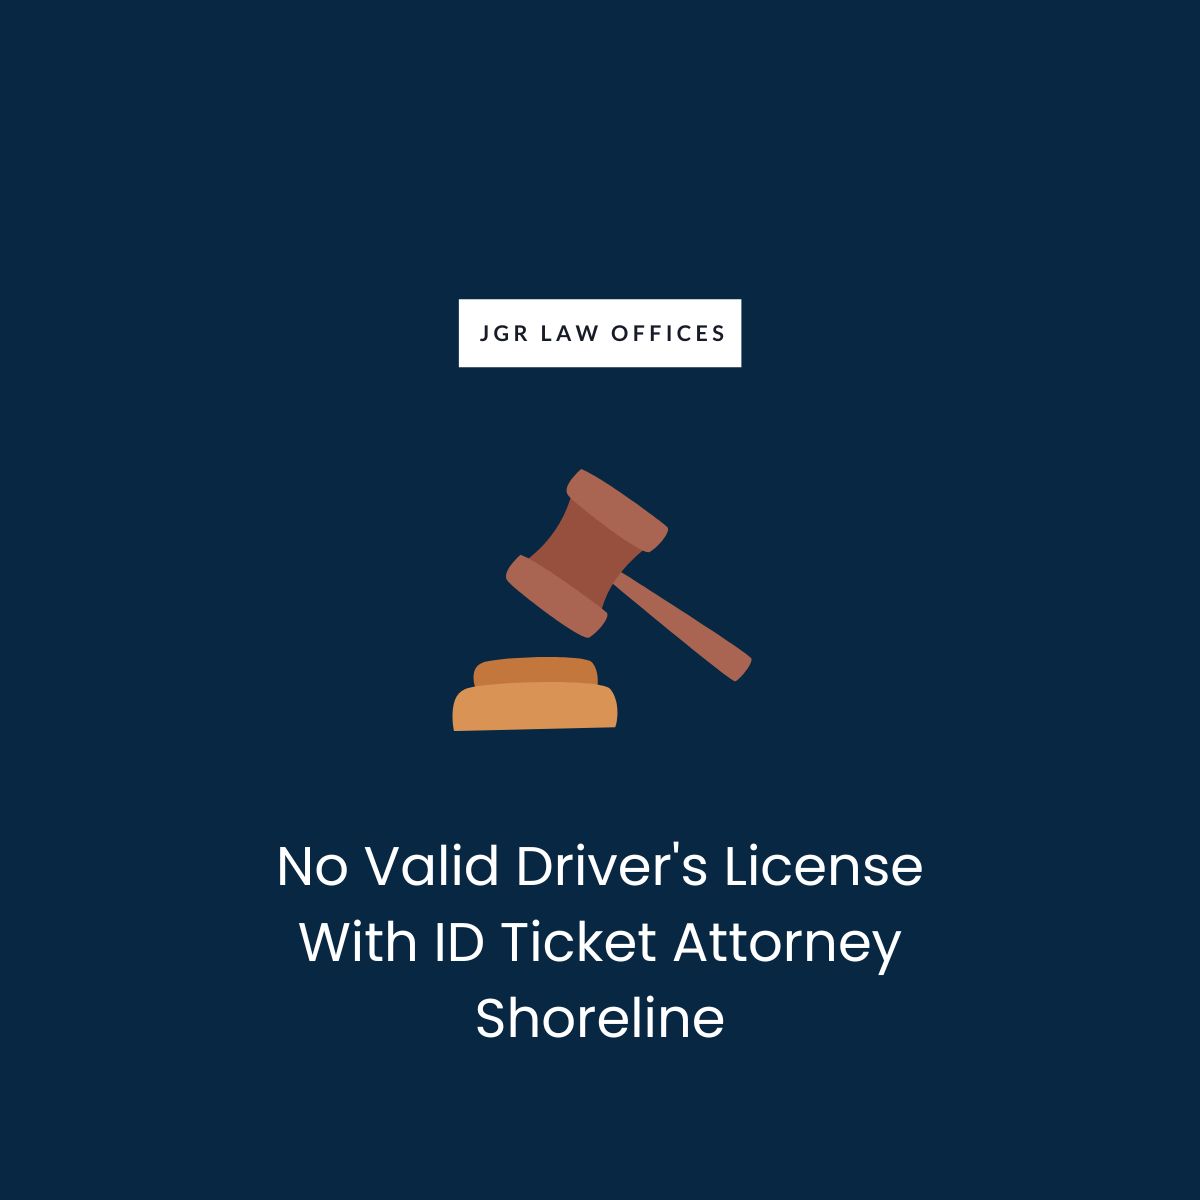 No Valid Driver's License With ID Ticket Attorney Shoreline